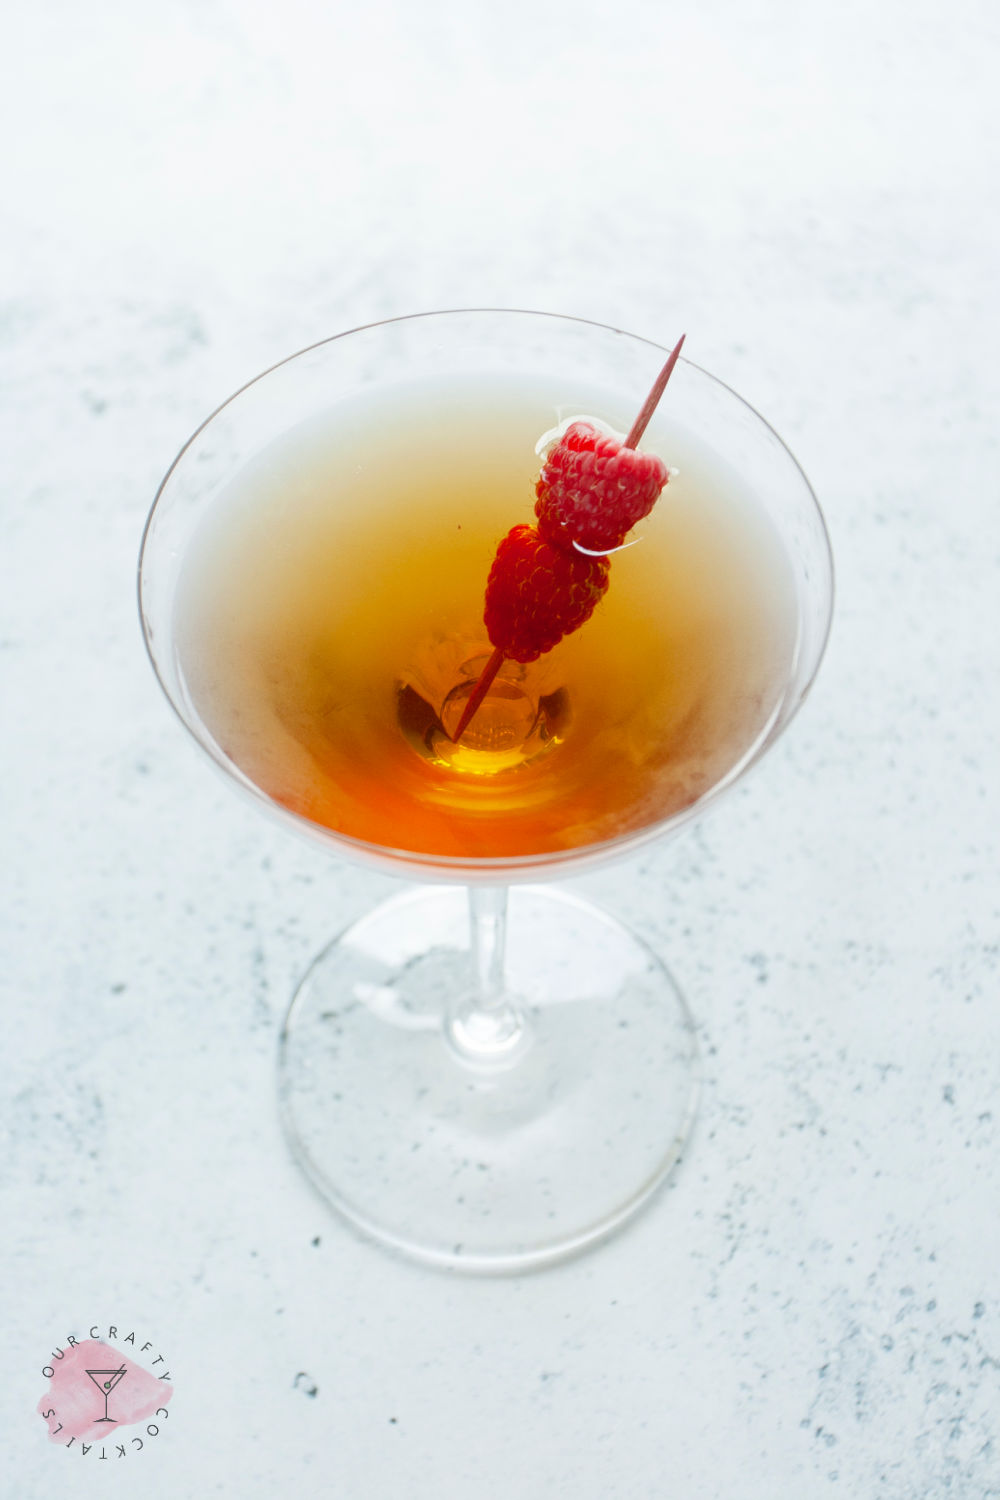 Sweet Vermouth Martini adding raspberries